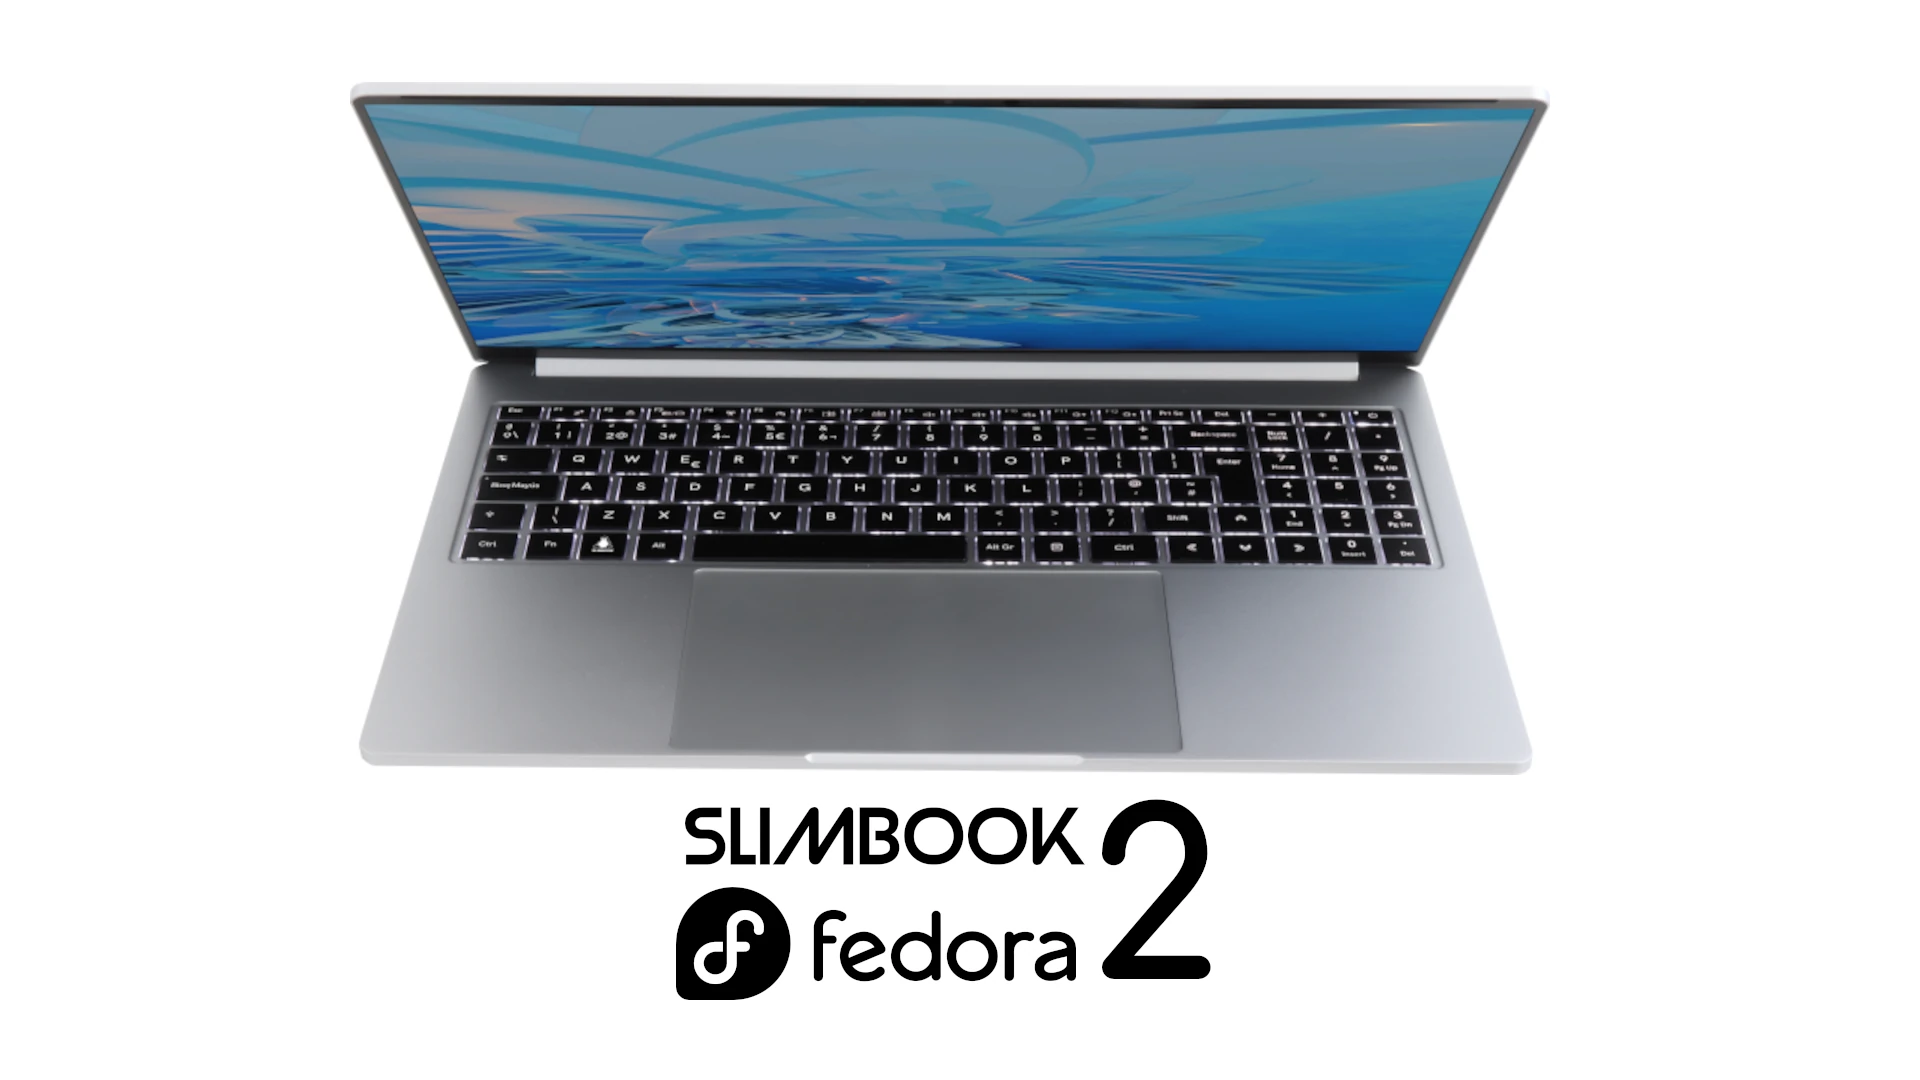 Slimbook Fedora 2 Laptops Launch with Fedora Linux 40 Workstation